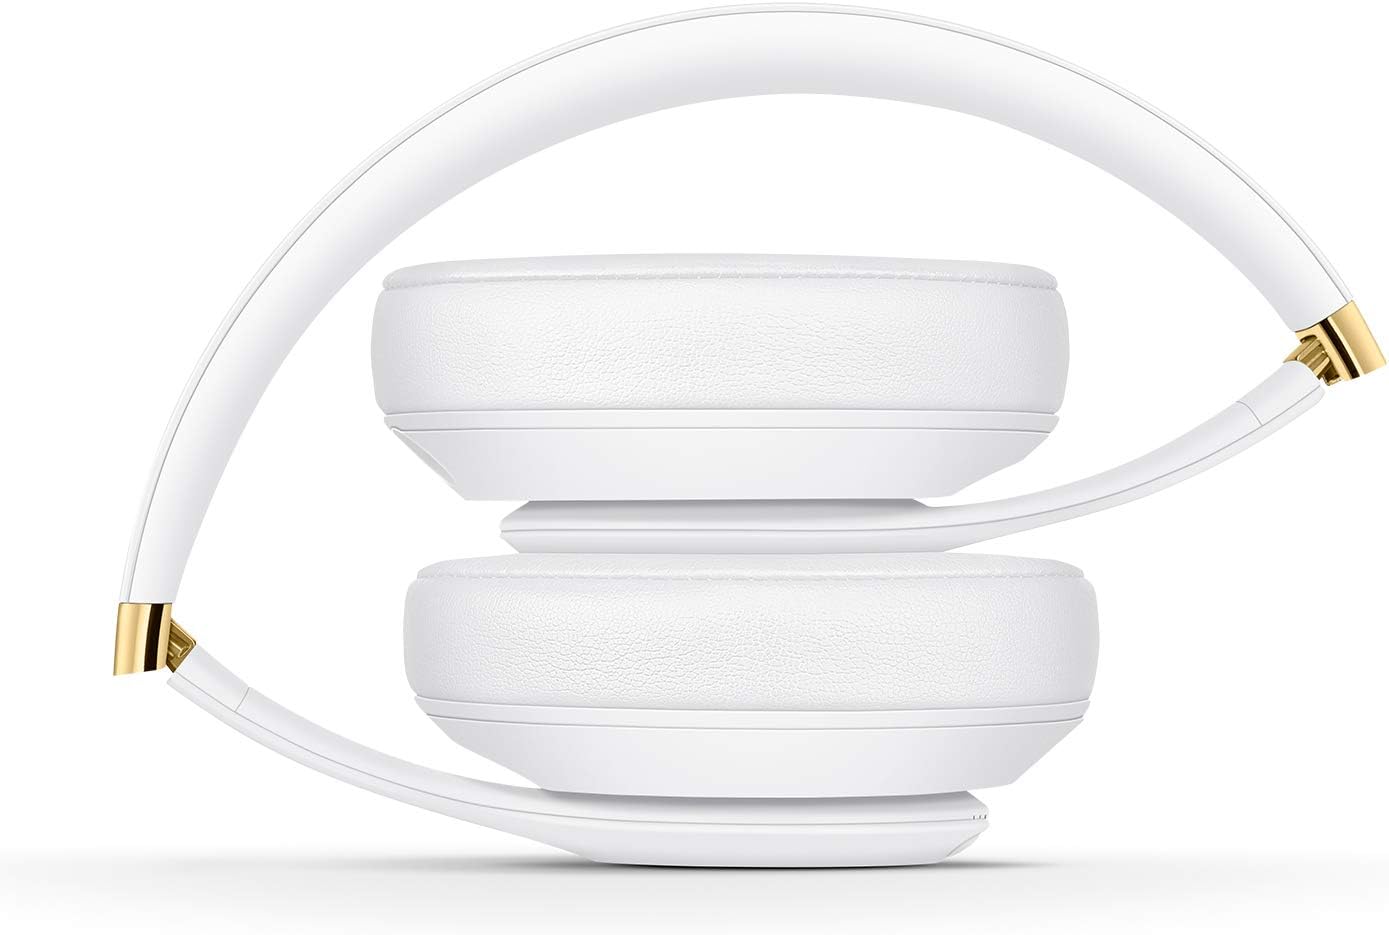 Beats Studio3 Over-Ear Wireless Headphones - White